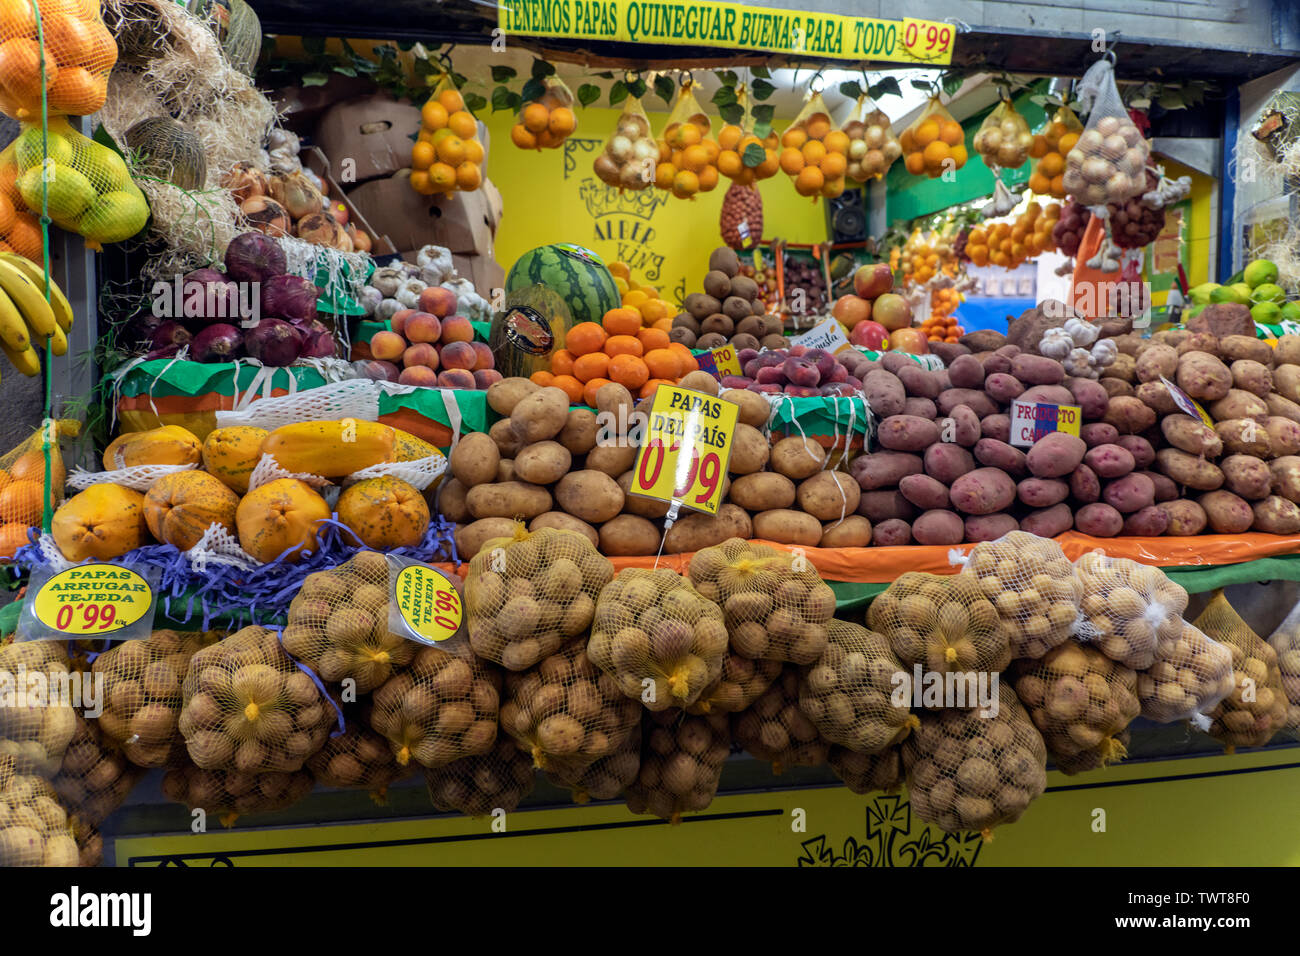 Obst- und Gemüsestand in der Markthalle Mercado de Vegueta a Las Palmas di Gran Canaria Foto Stock